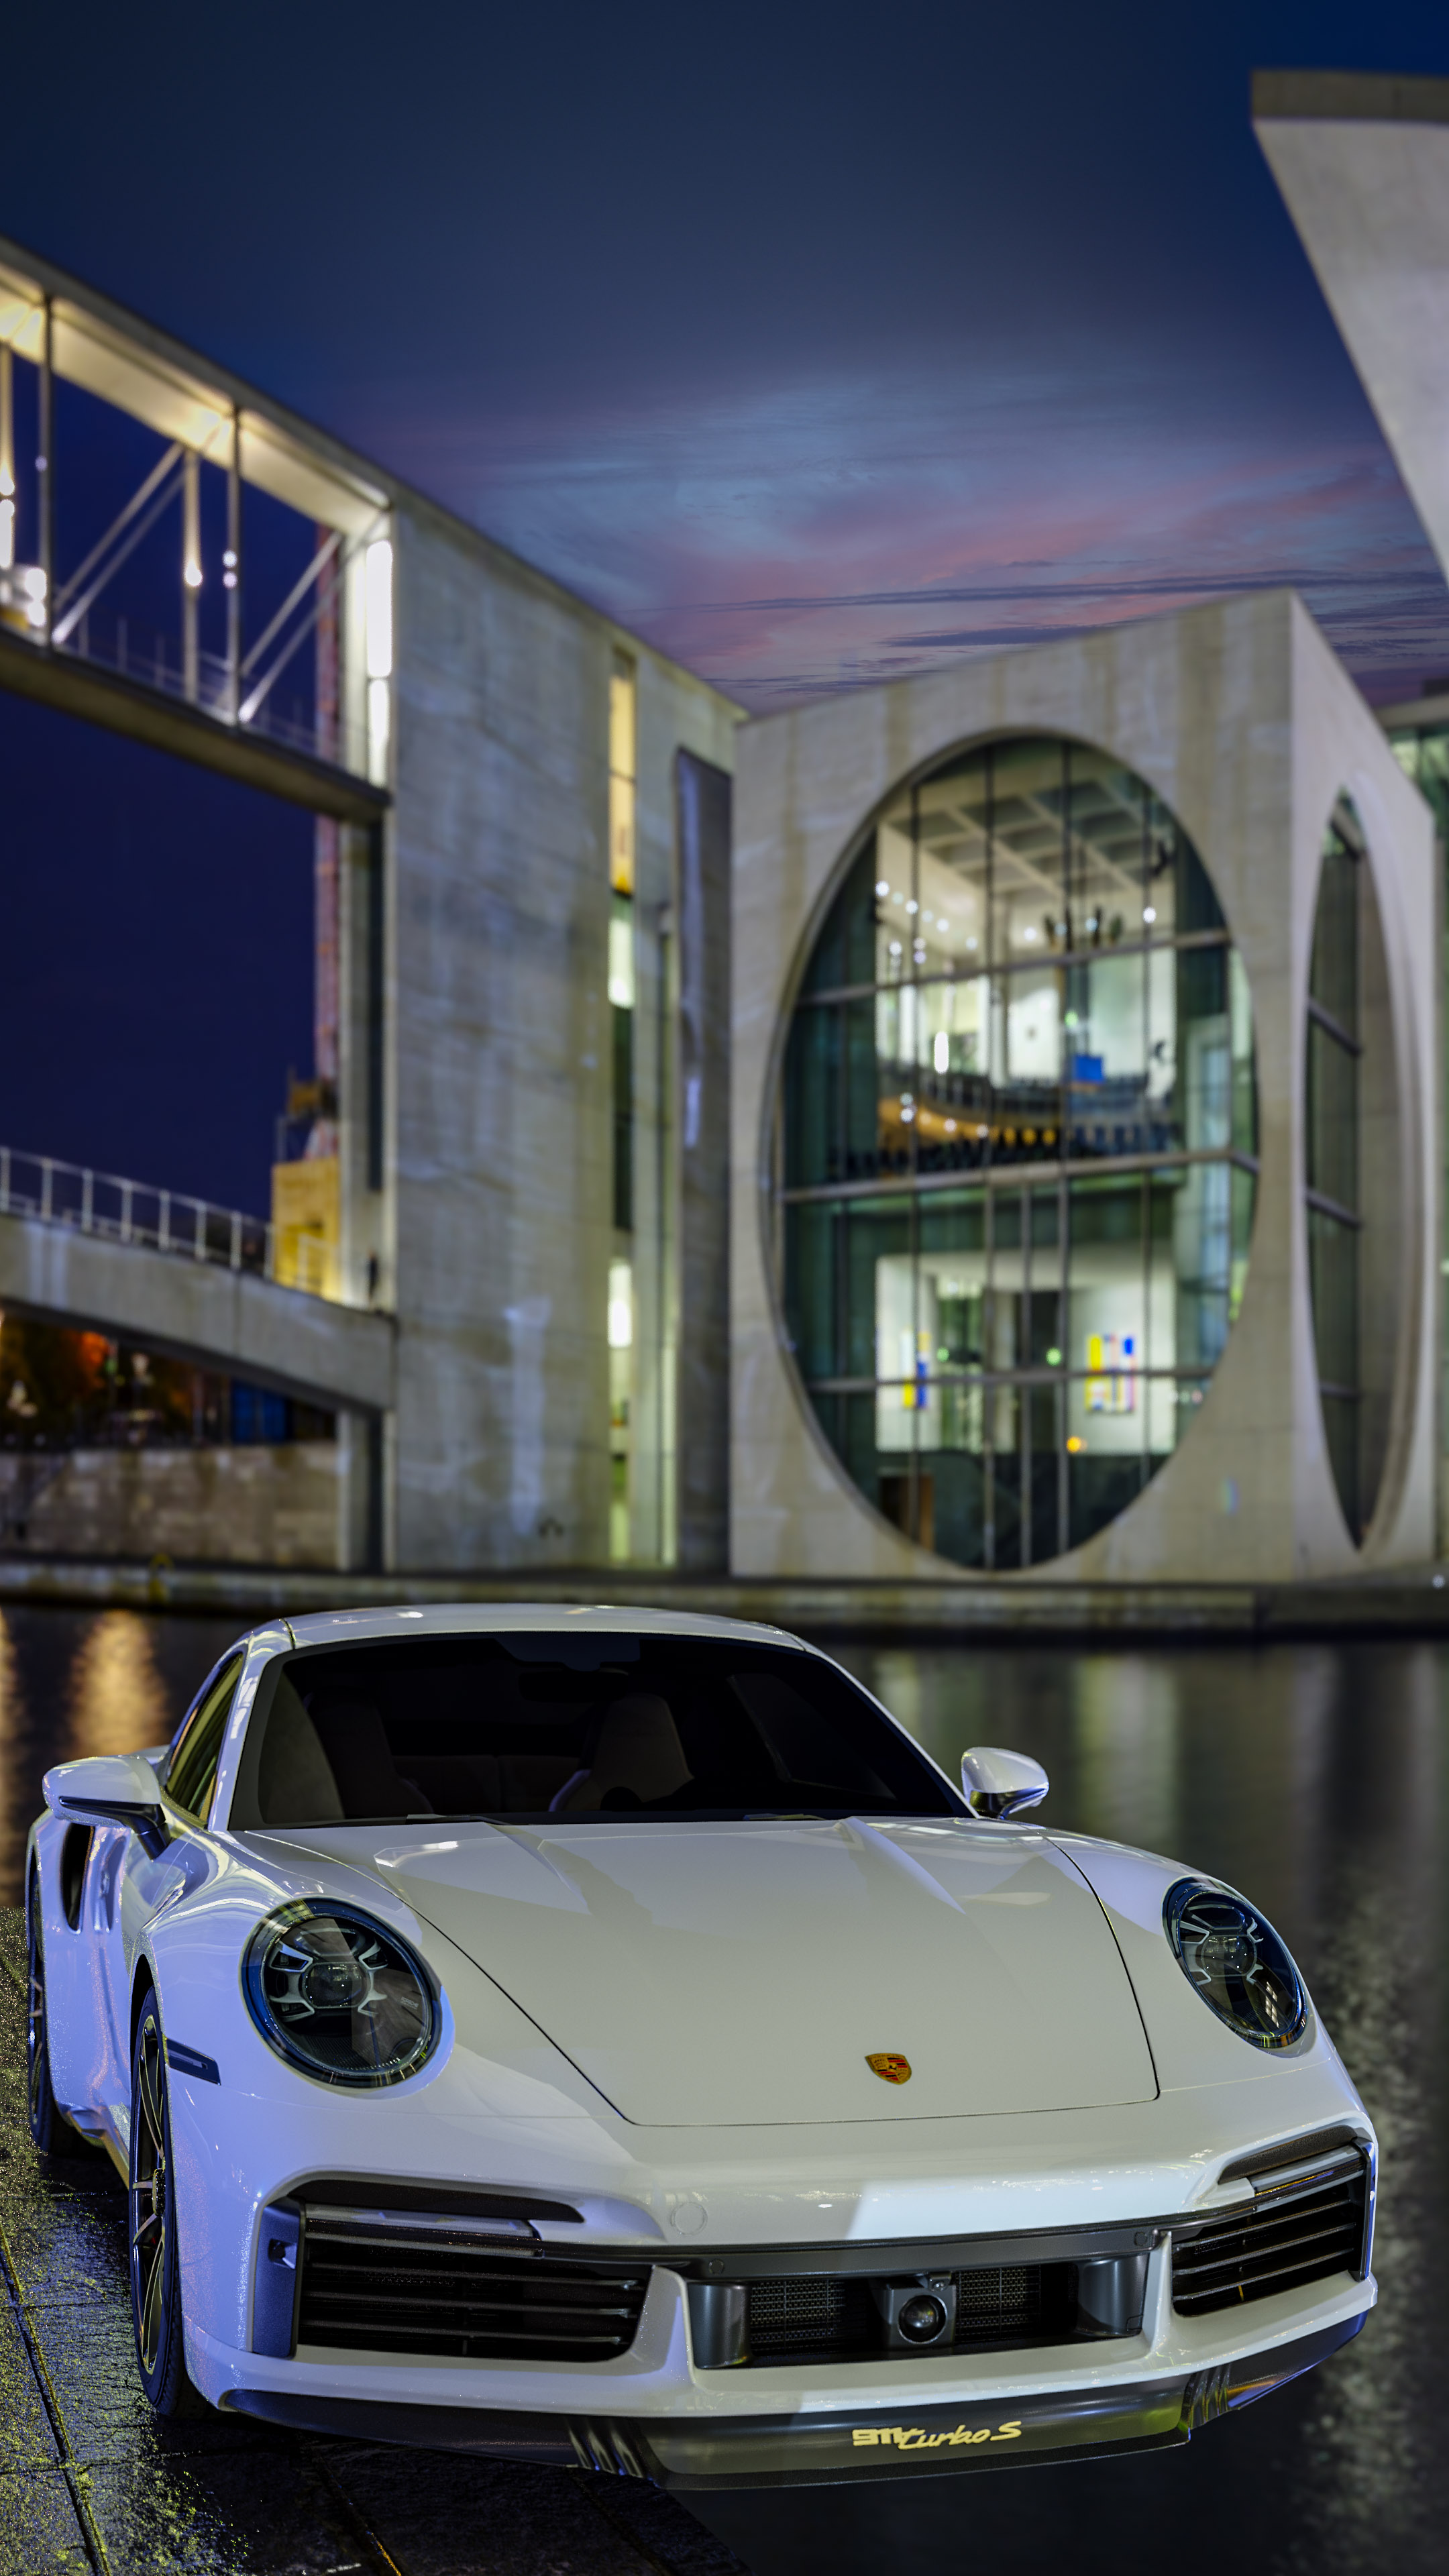 iphone car wallpaper in 4k Ultra HD of Porsche  911 Turbo